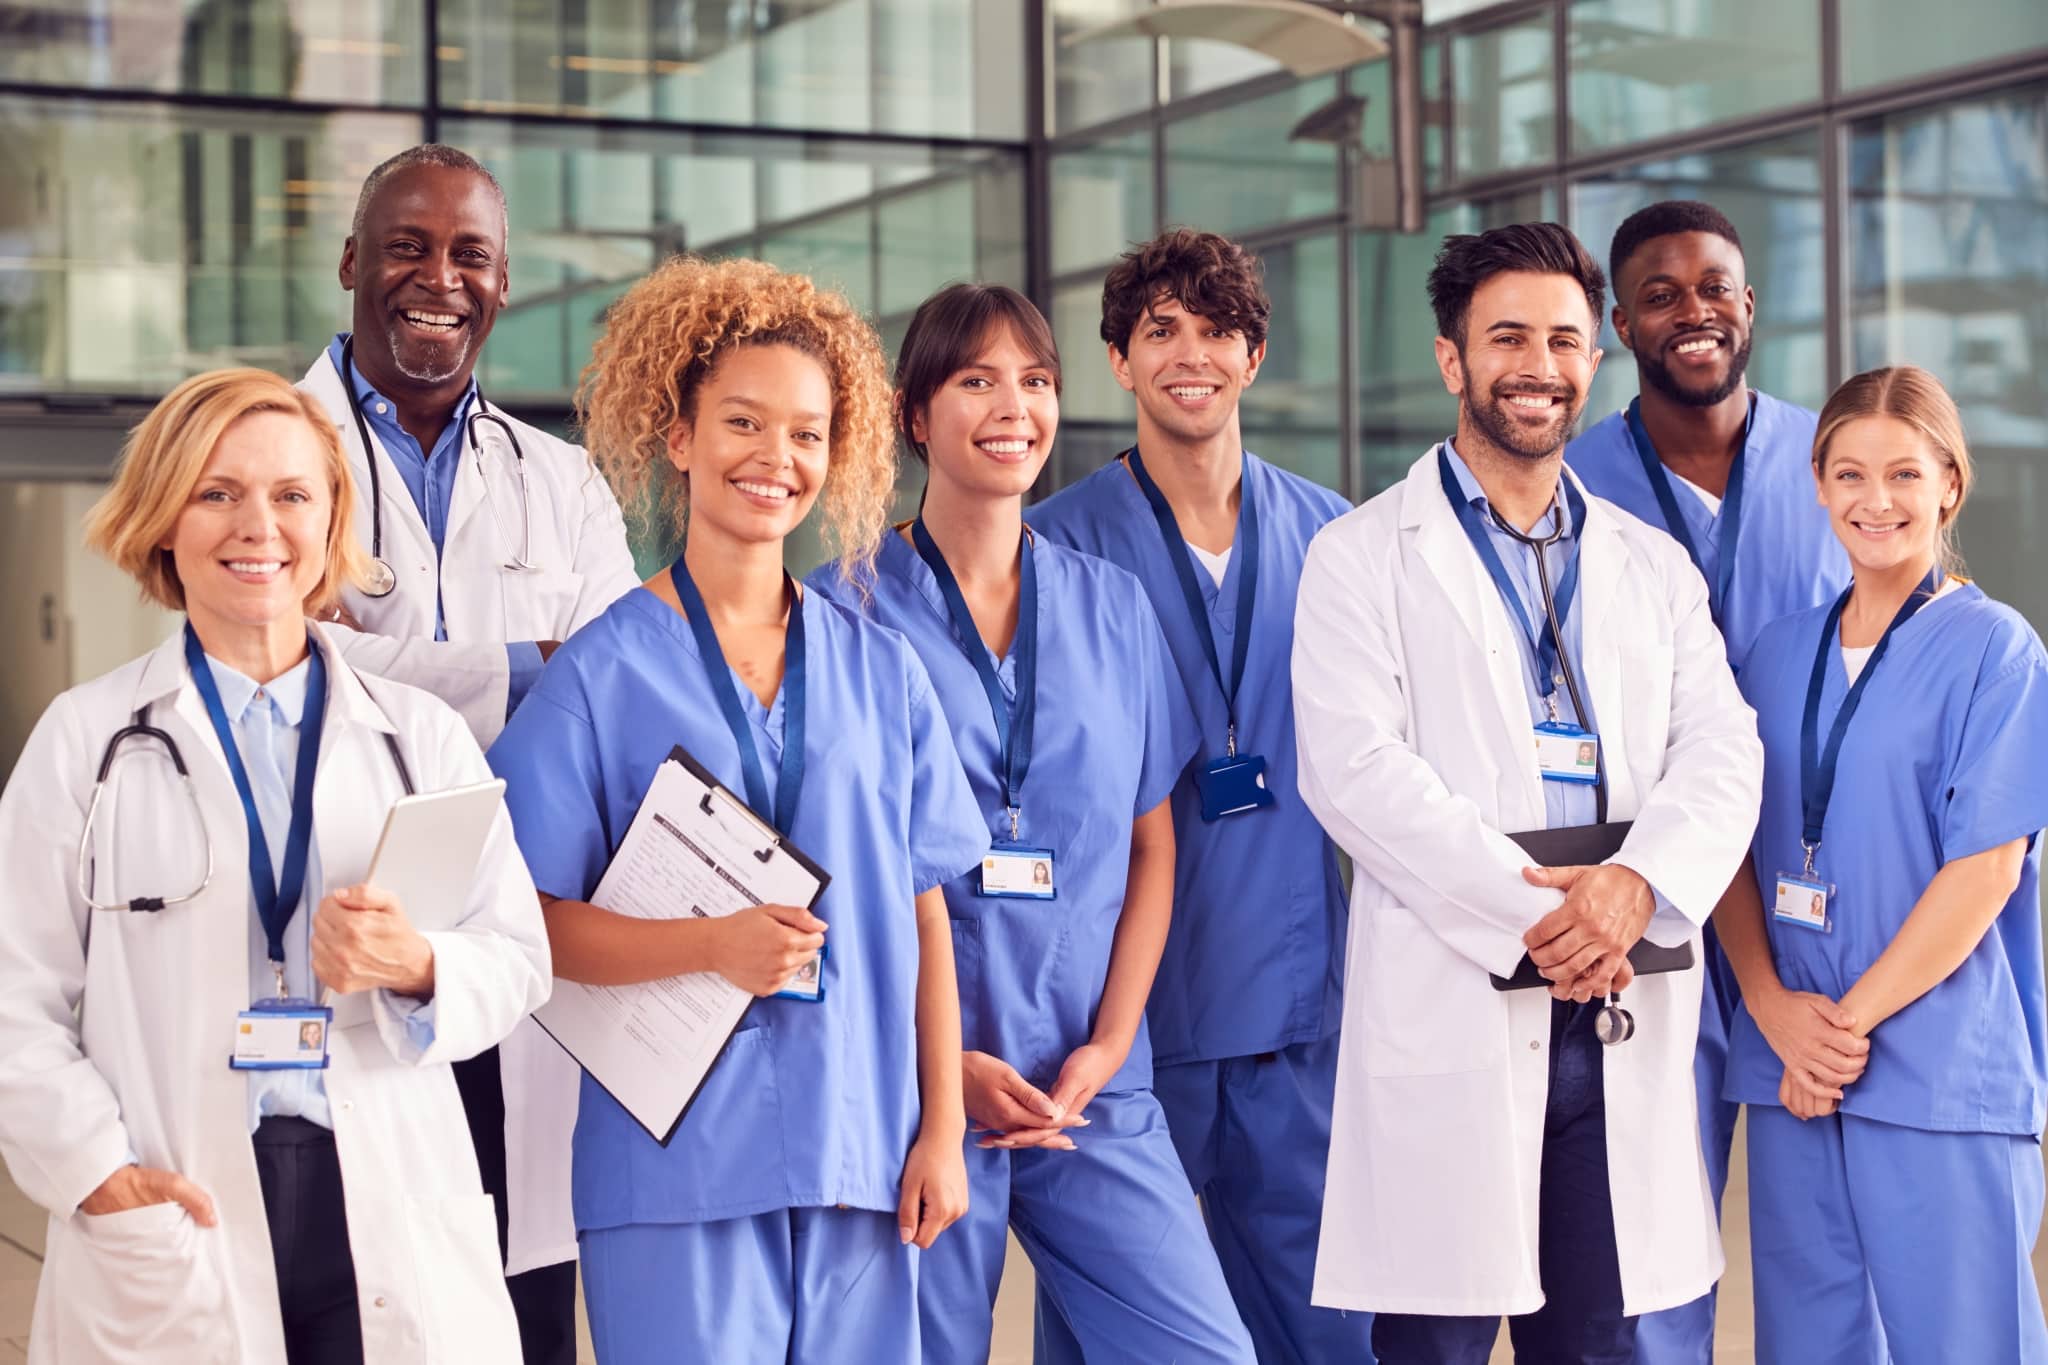 Portrait of a smiling medical team